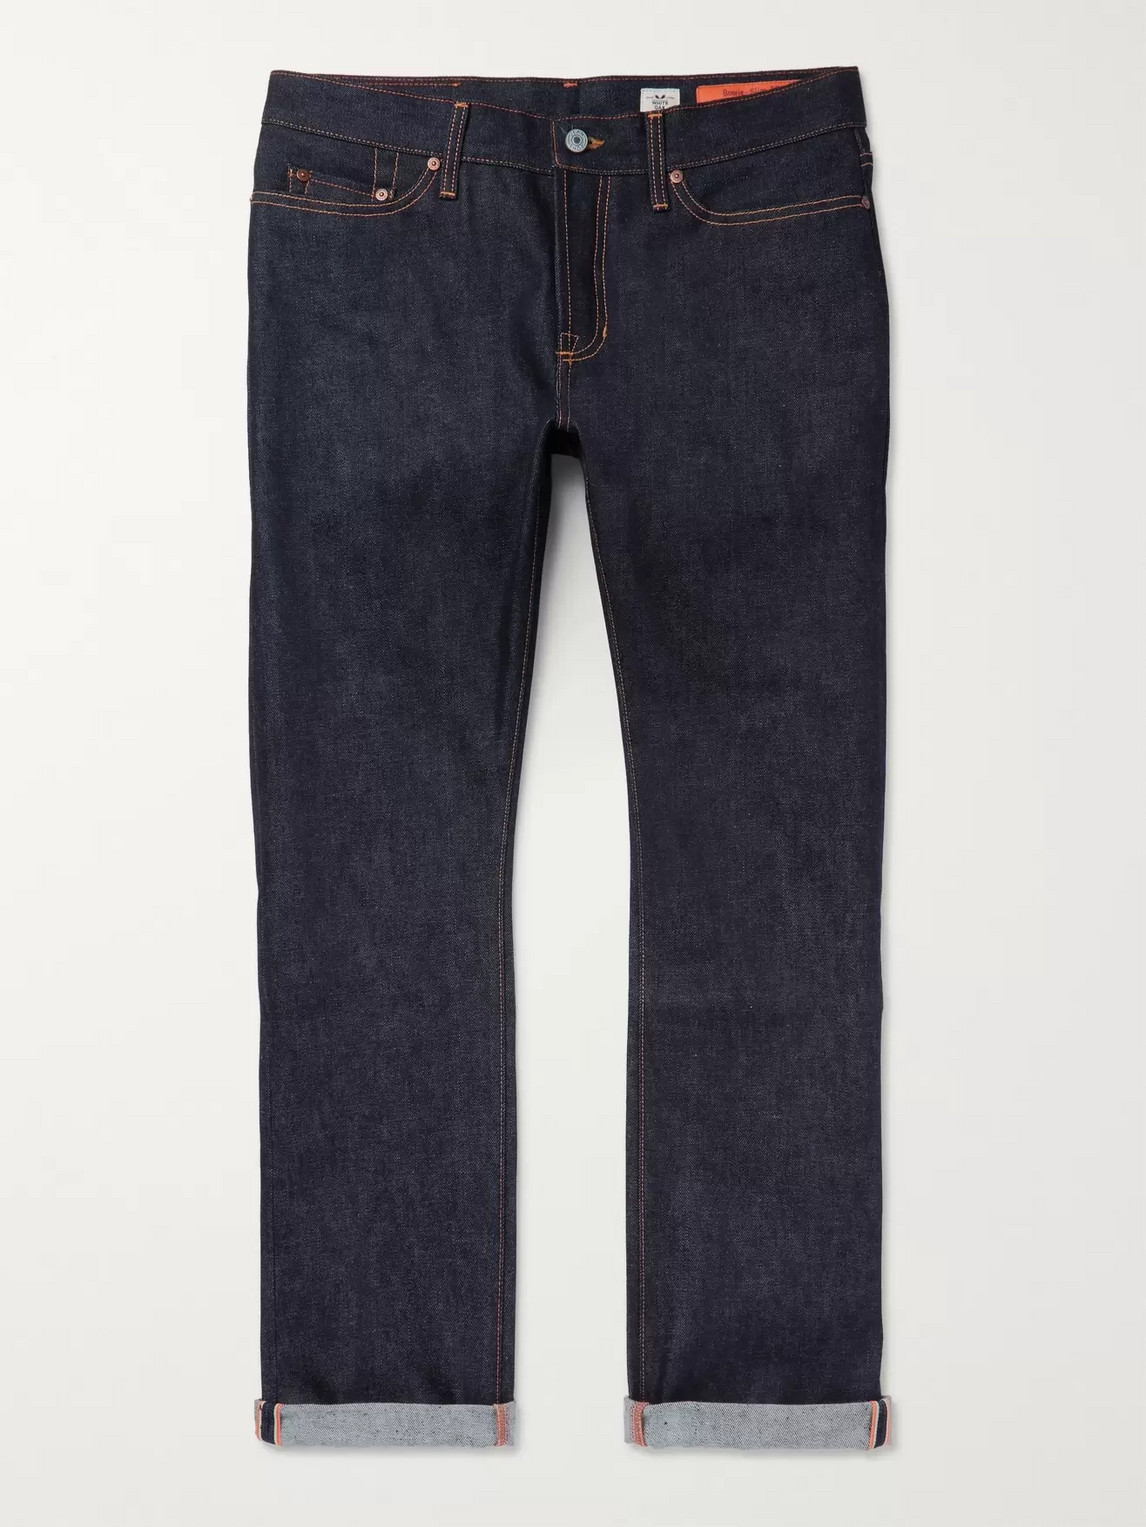 Jean Shop Bowie Slim-fit Raw Selvedge Denim Jeans In Blue